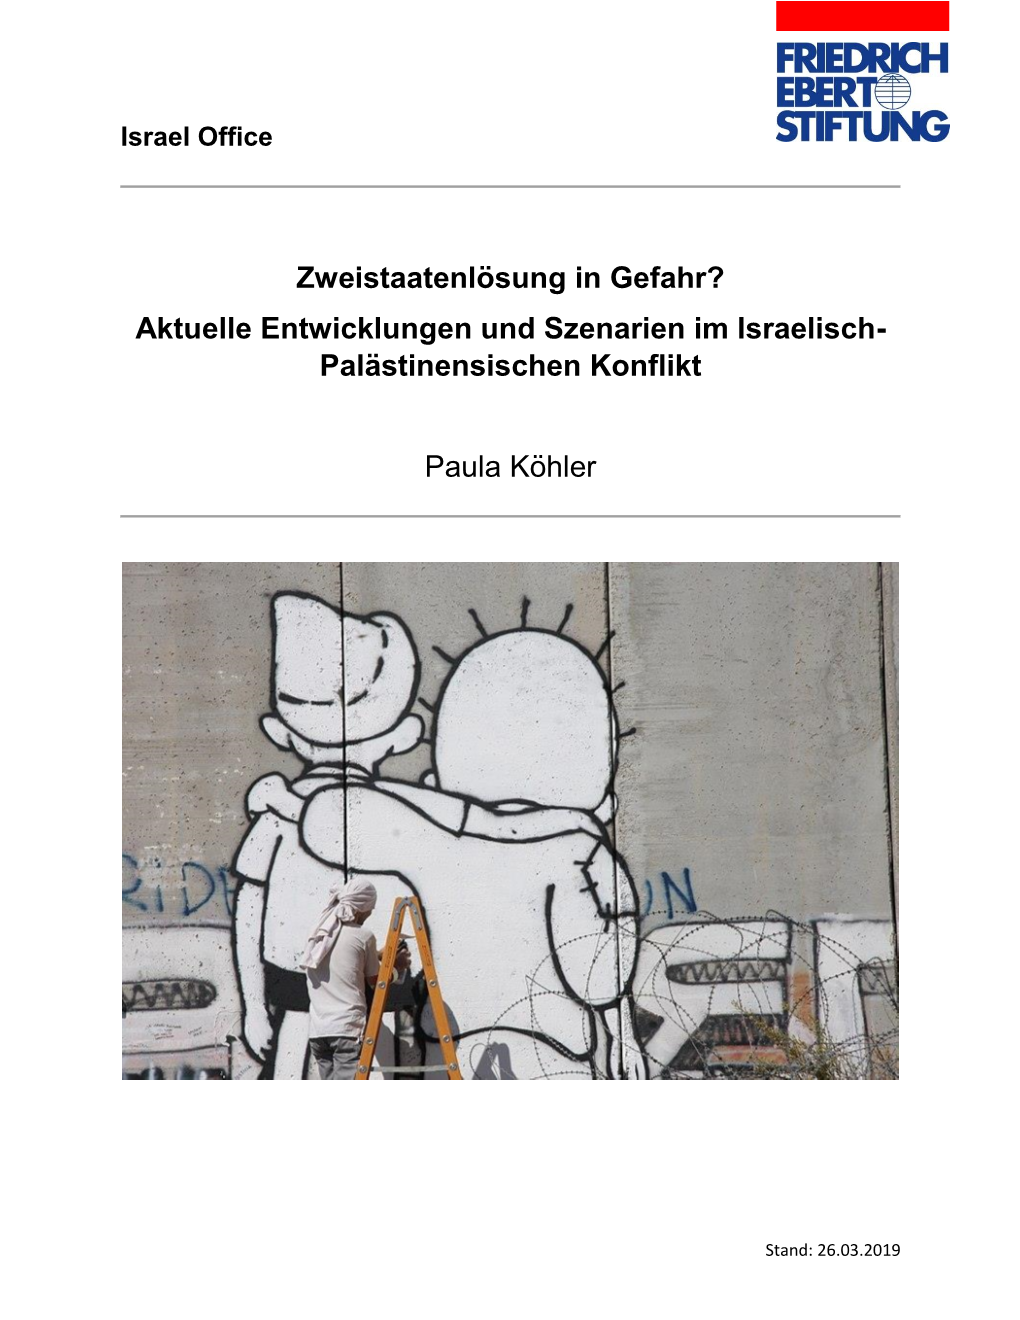 Palästinensischen Konflikt Paula Köhler